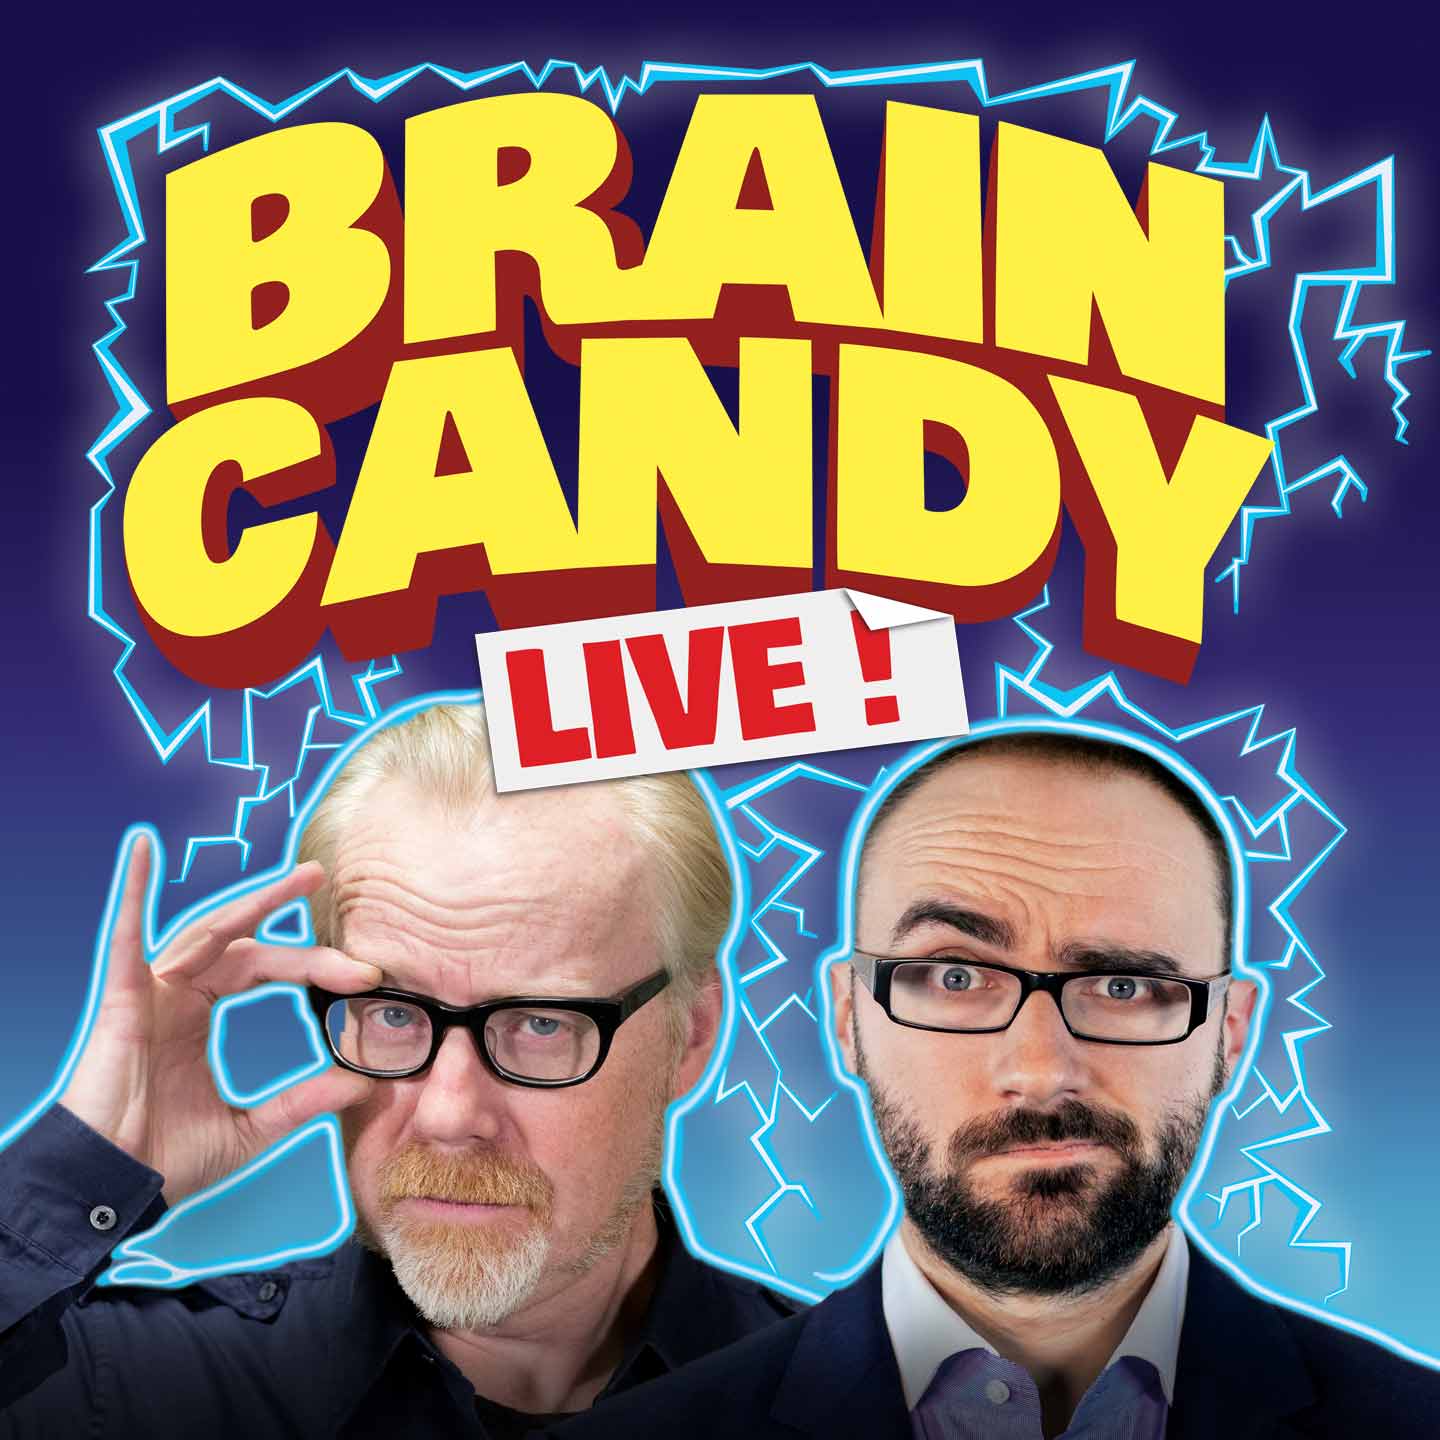 Brain Candy Live!